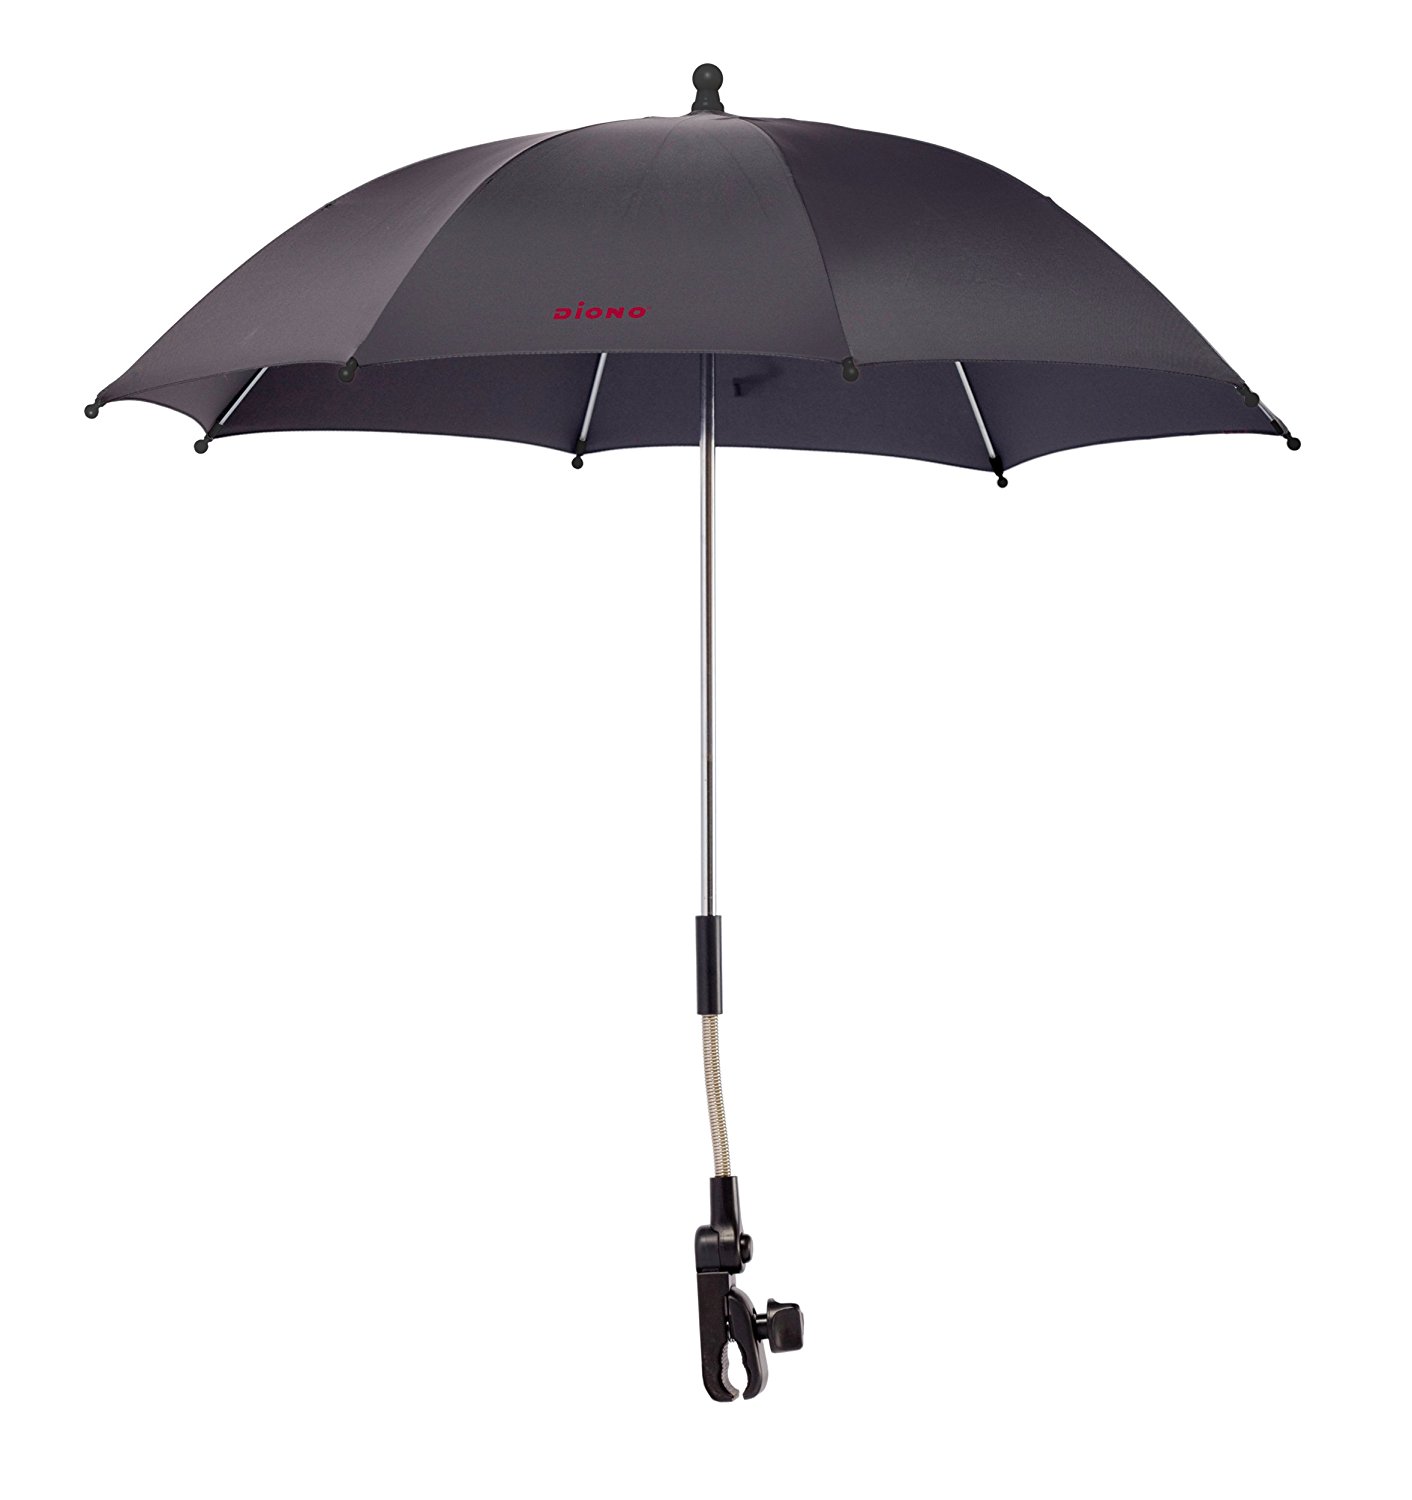 Amazon clipartall.com : Diono Buggy Shade Stroller Umbrella, Black : Child Safety Car Seat Accessories : Baby